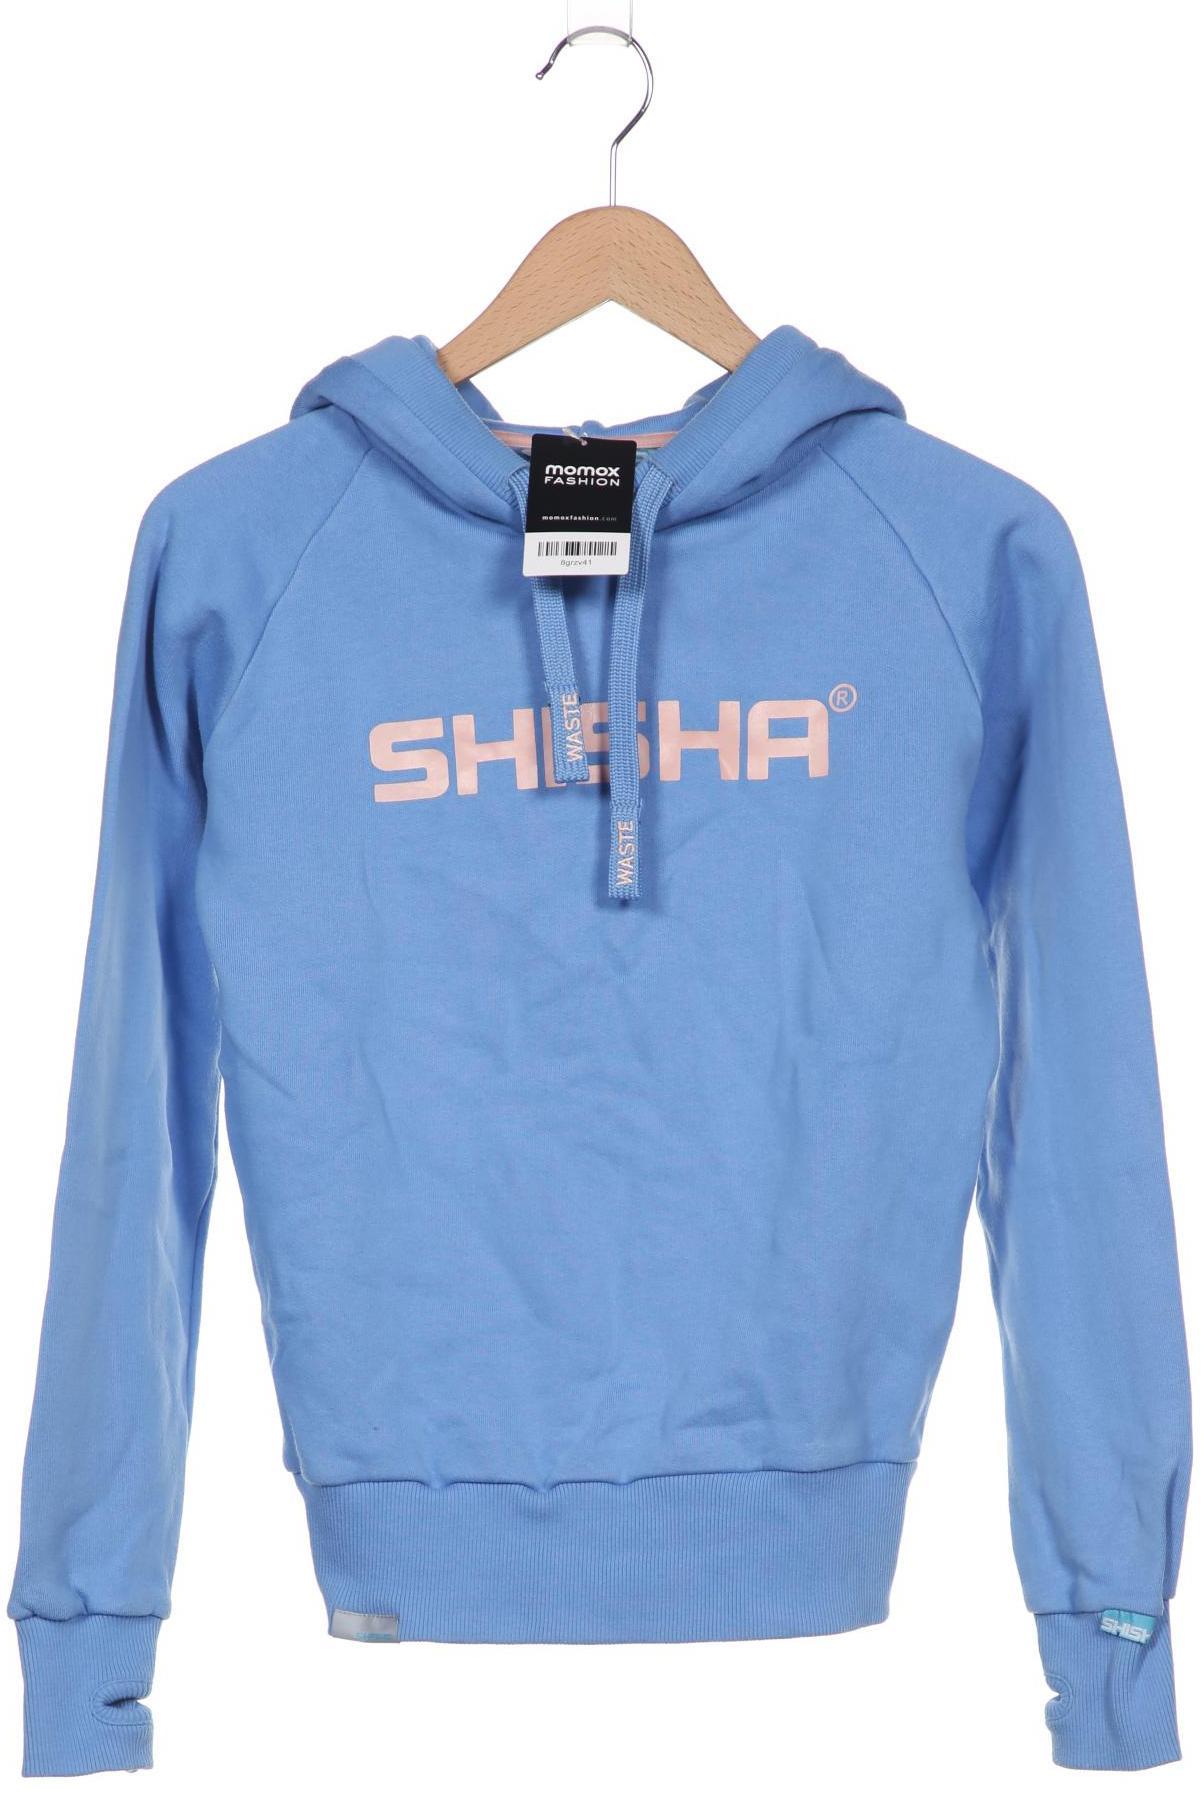 SHISHA Brand Damen Kapuzenpullover, blau